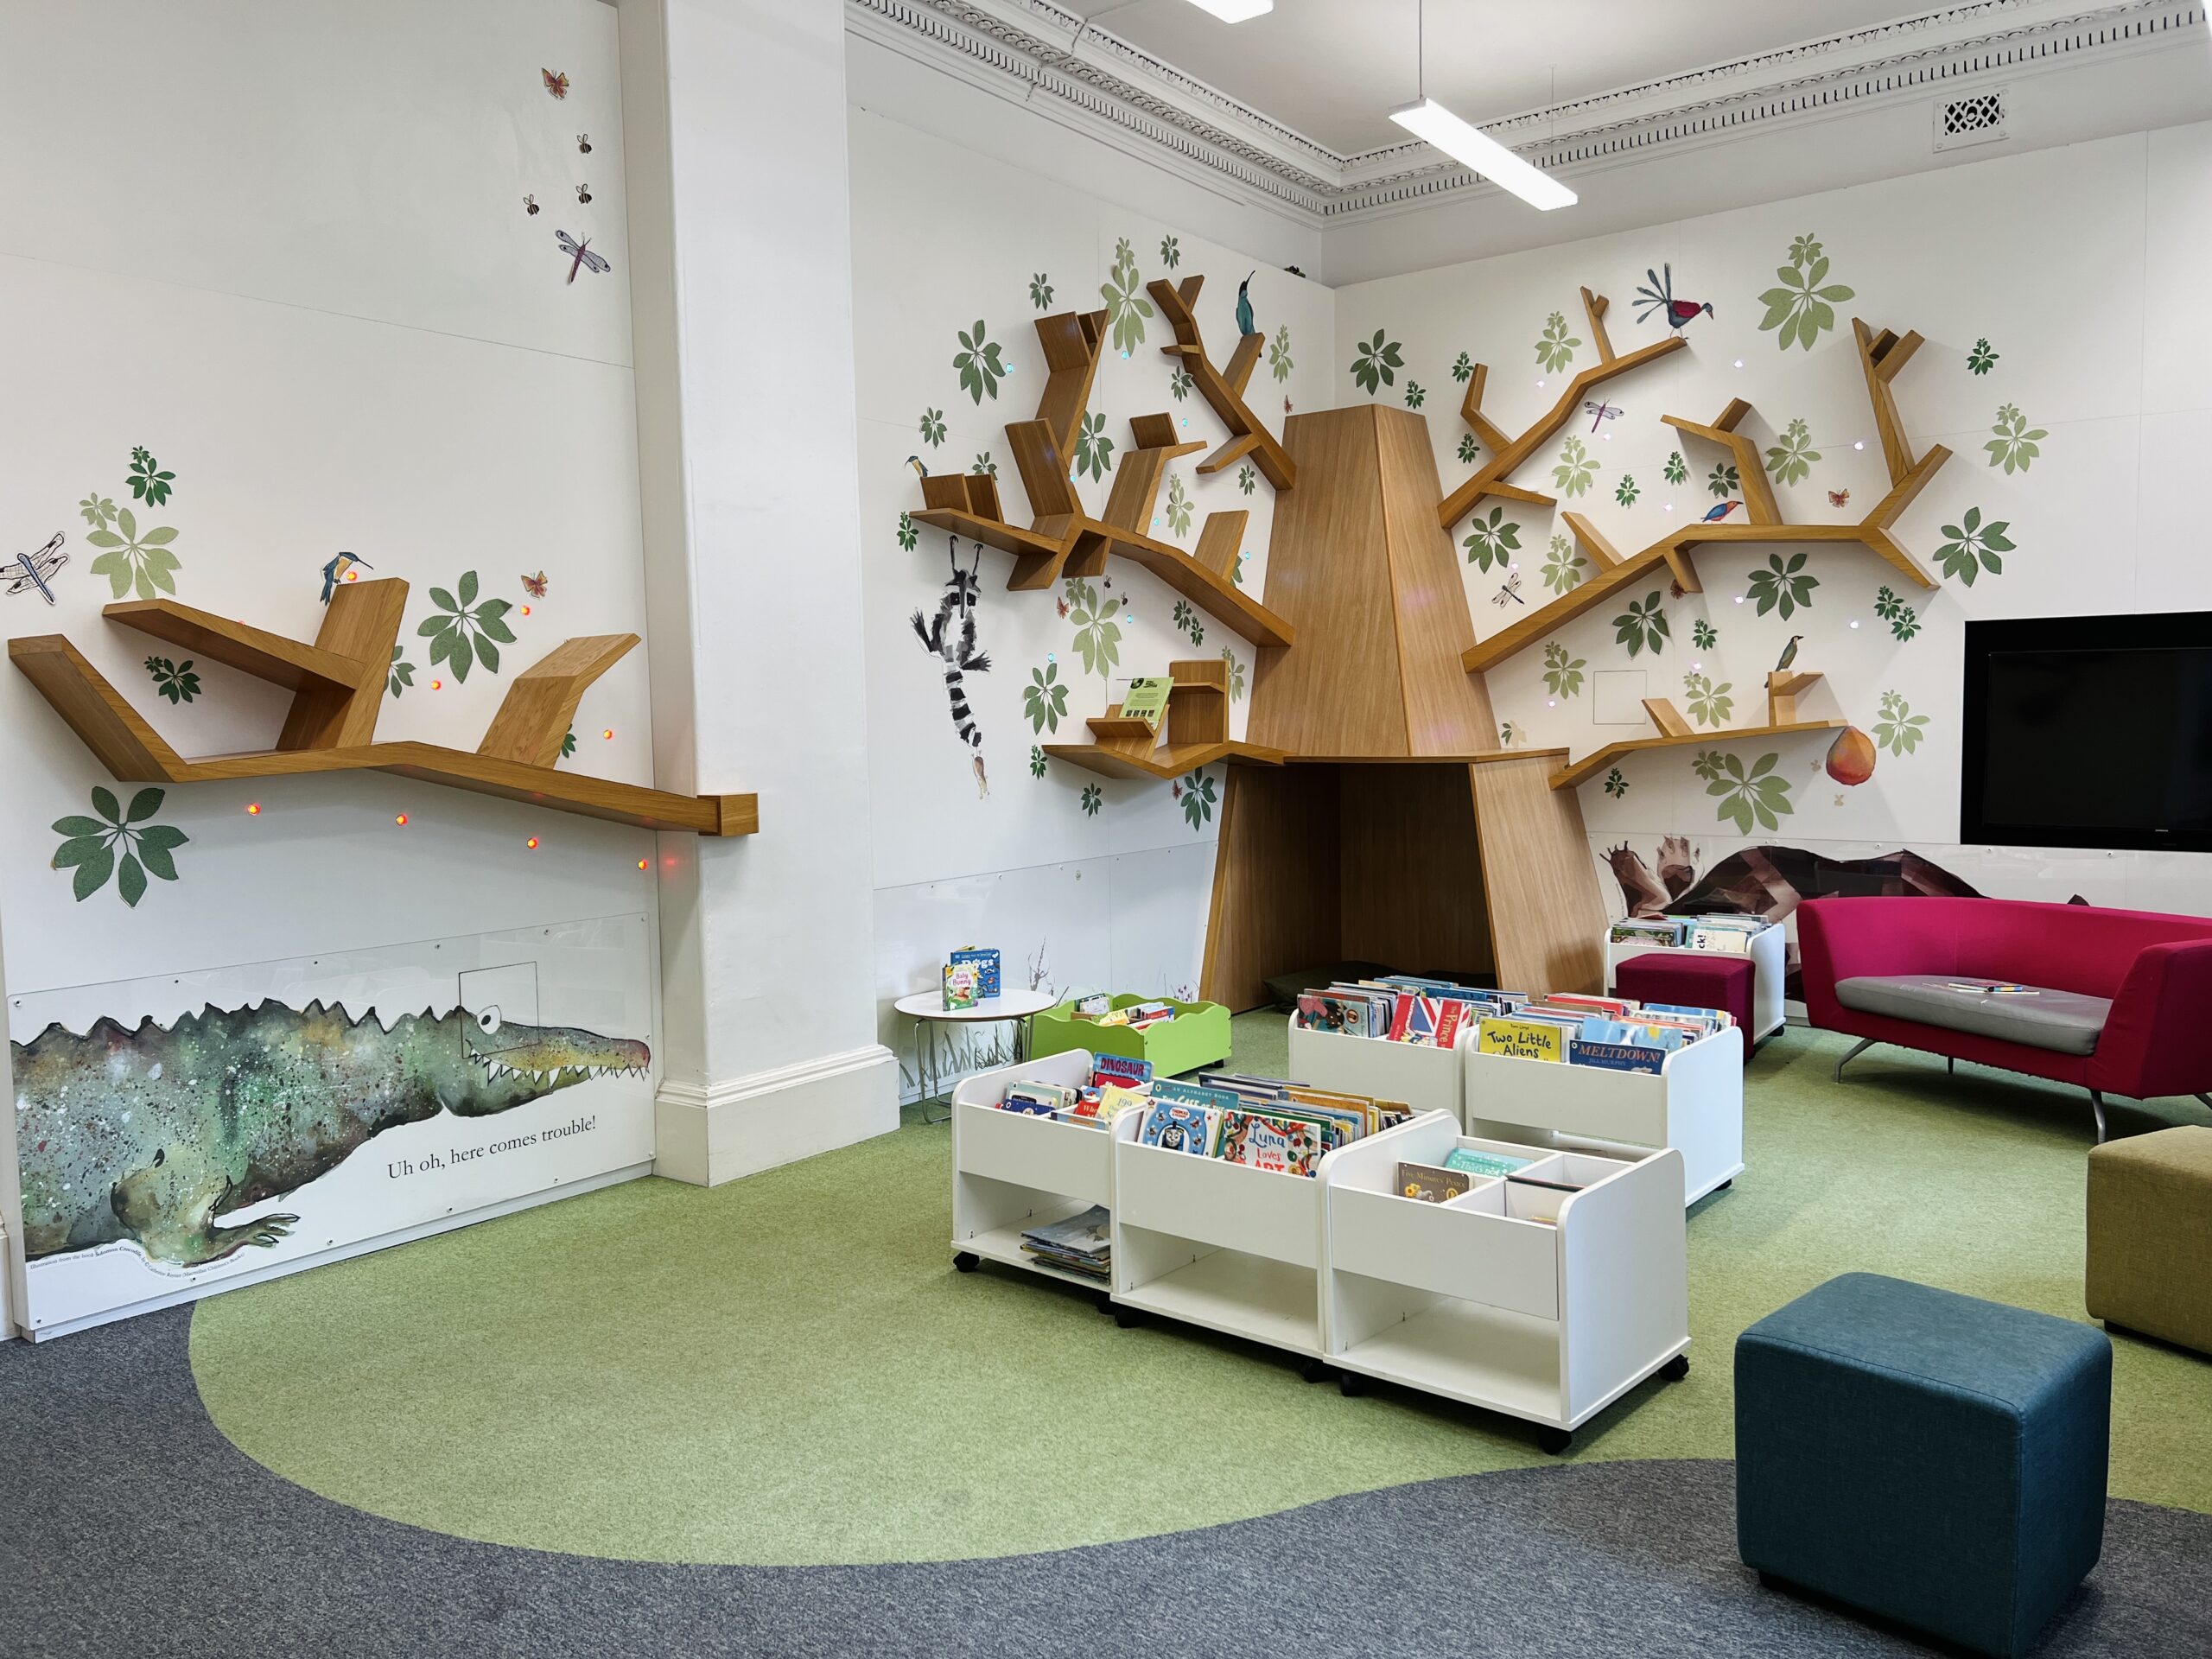 Edinburgh Central Children's Library tree house